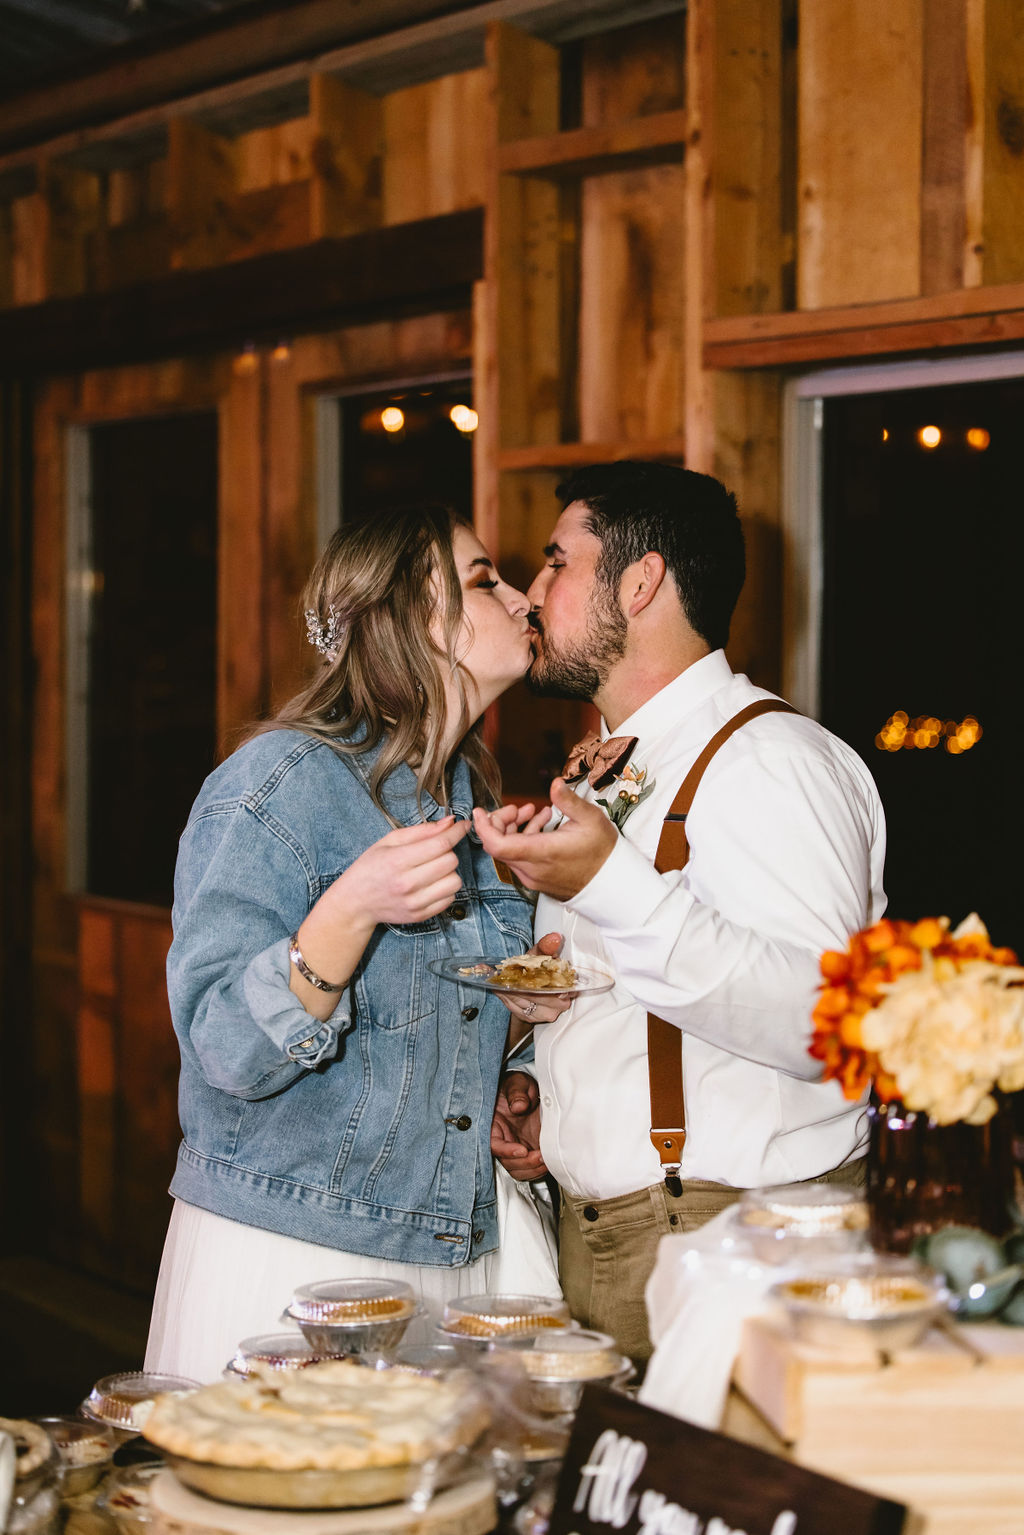 An Outdoor Barn Fall Wedding Day In California